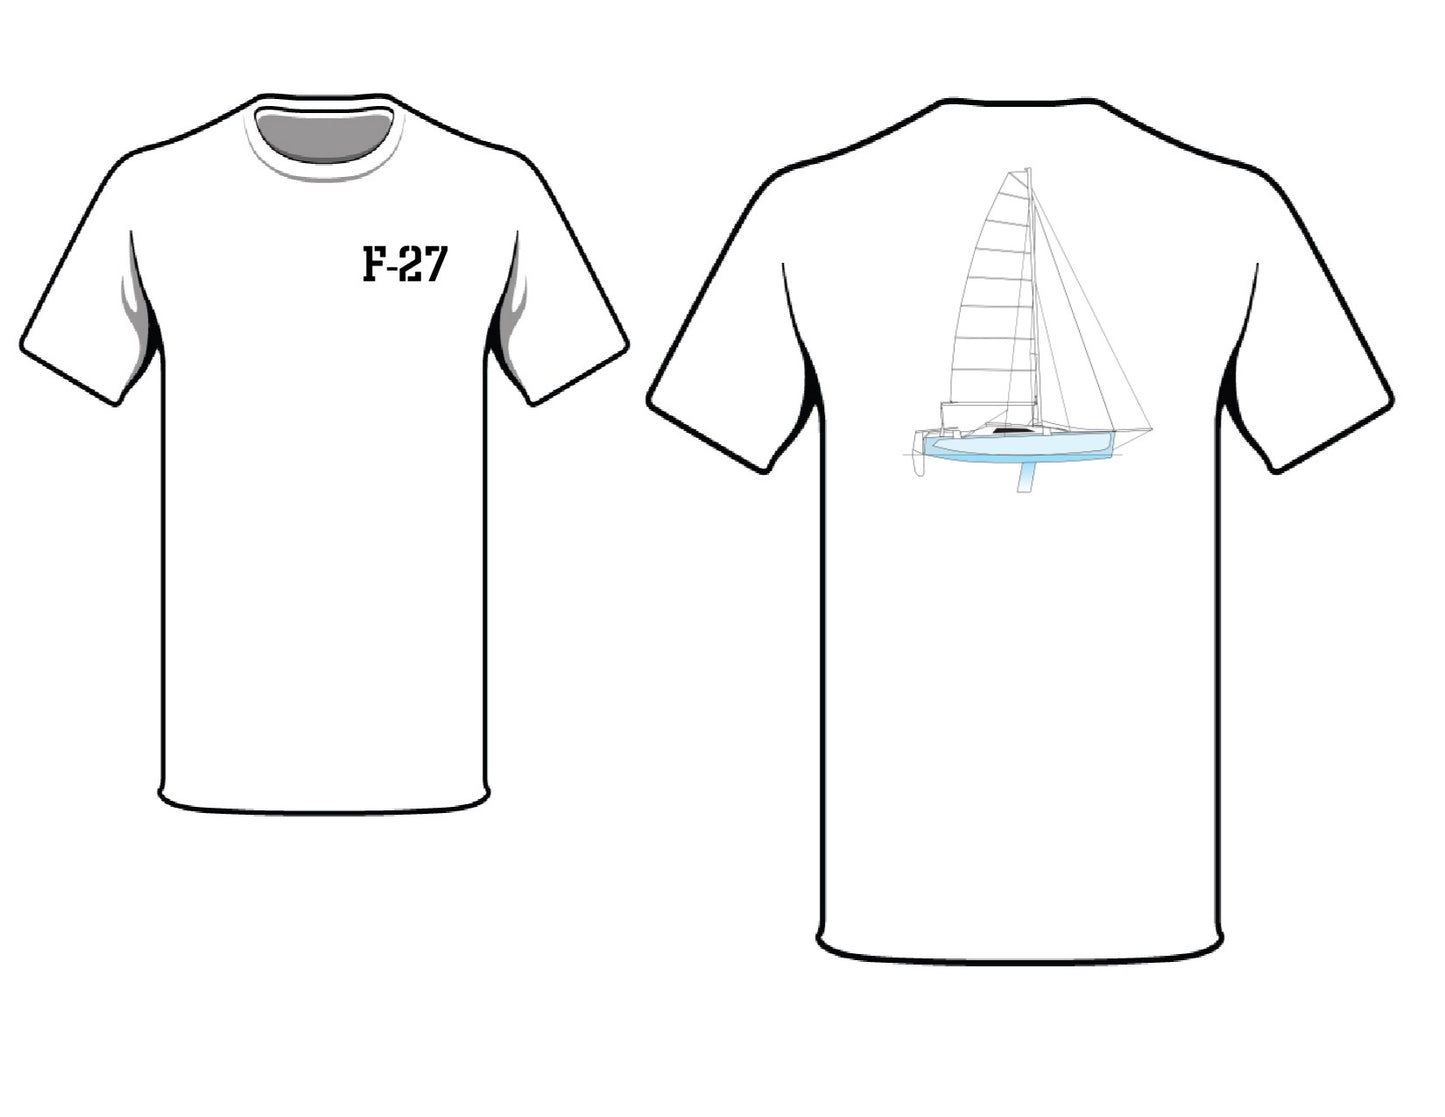 Farrior 27 T-Shirt